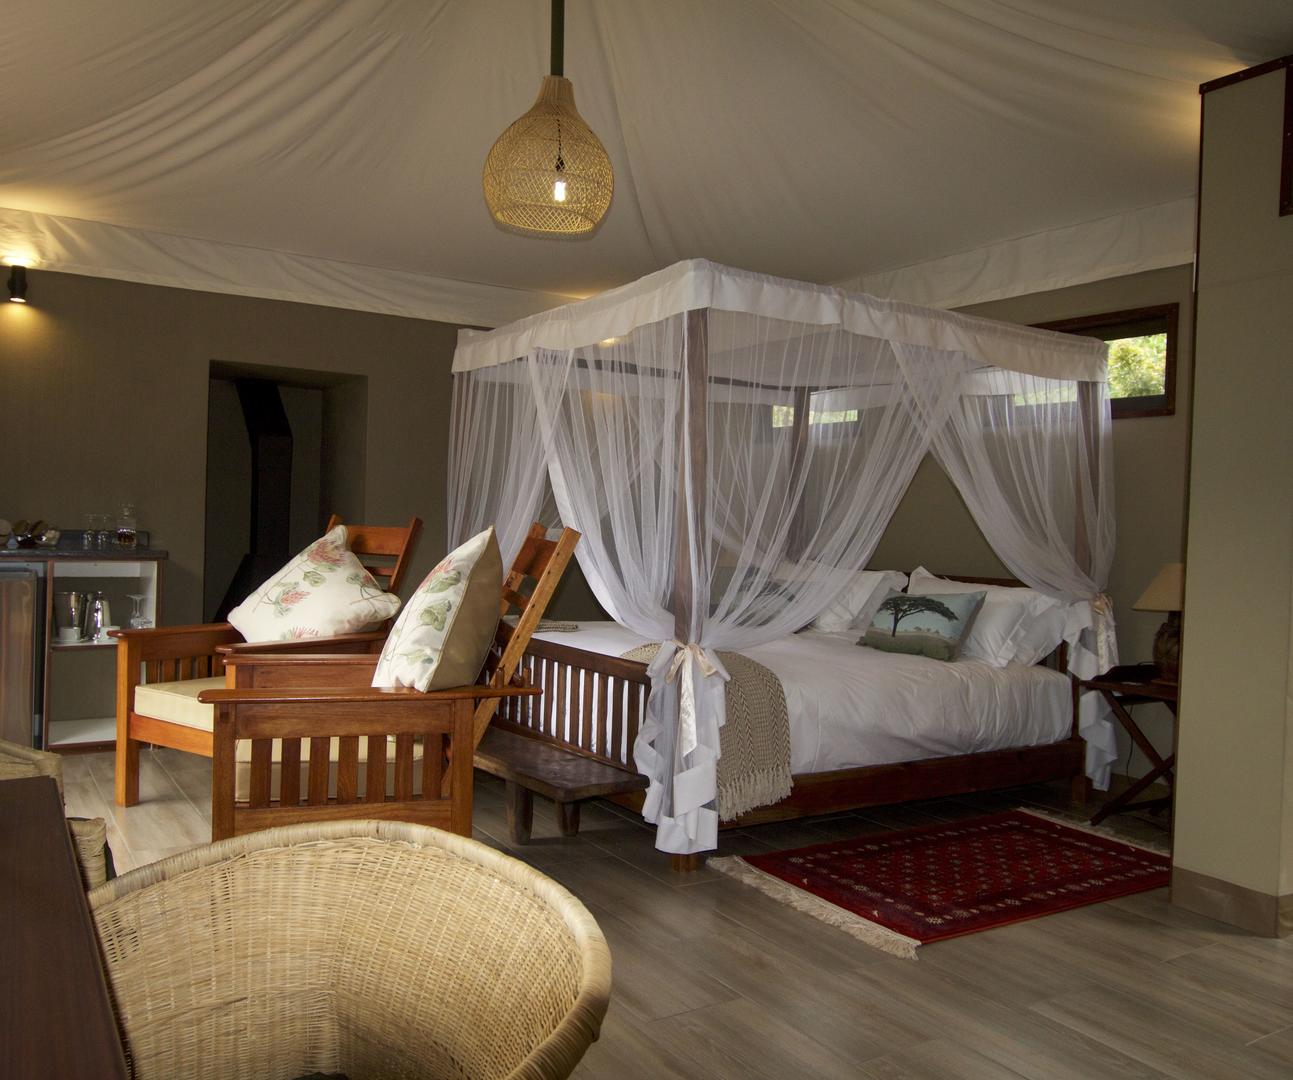 Inzalo Safari Lodge Welgevonden Waterberg Limpopo 8